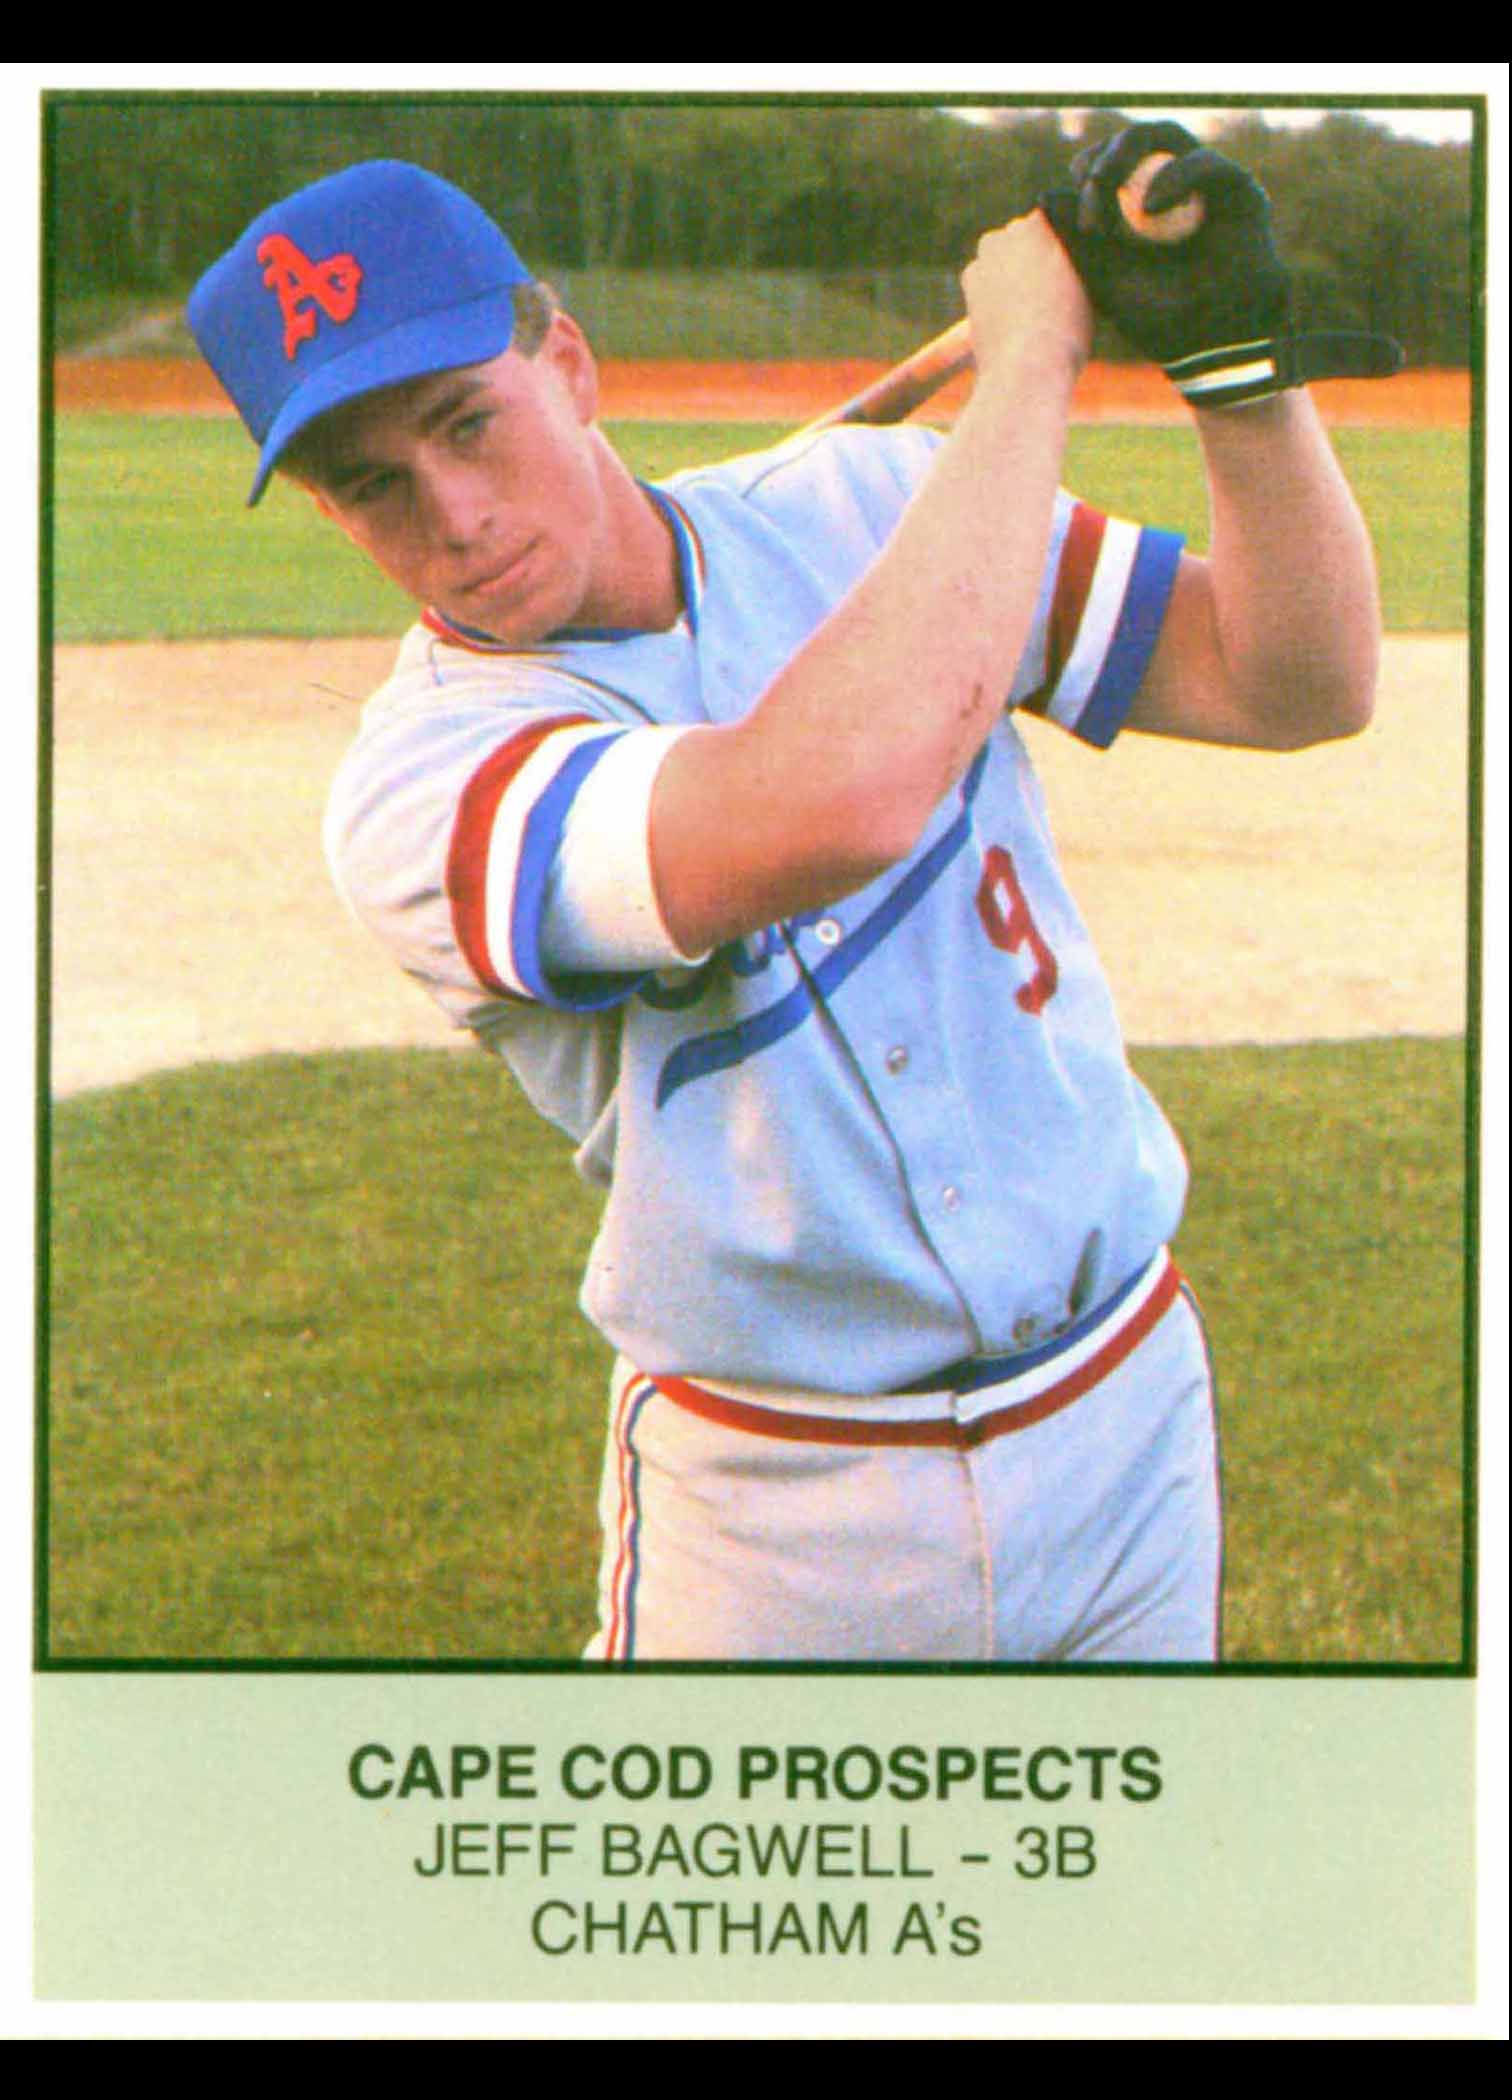 1988 Cape Cod Prospects Ballpark